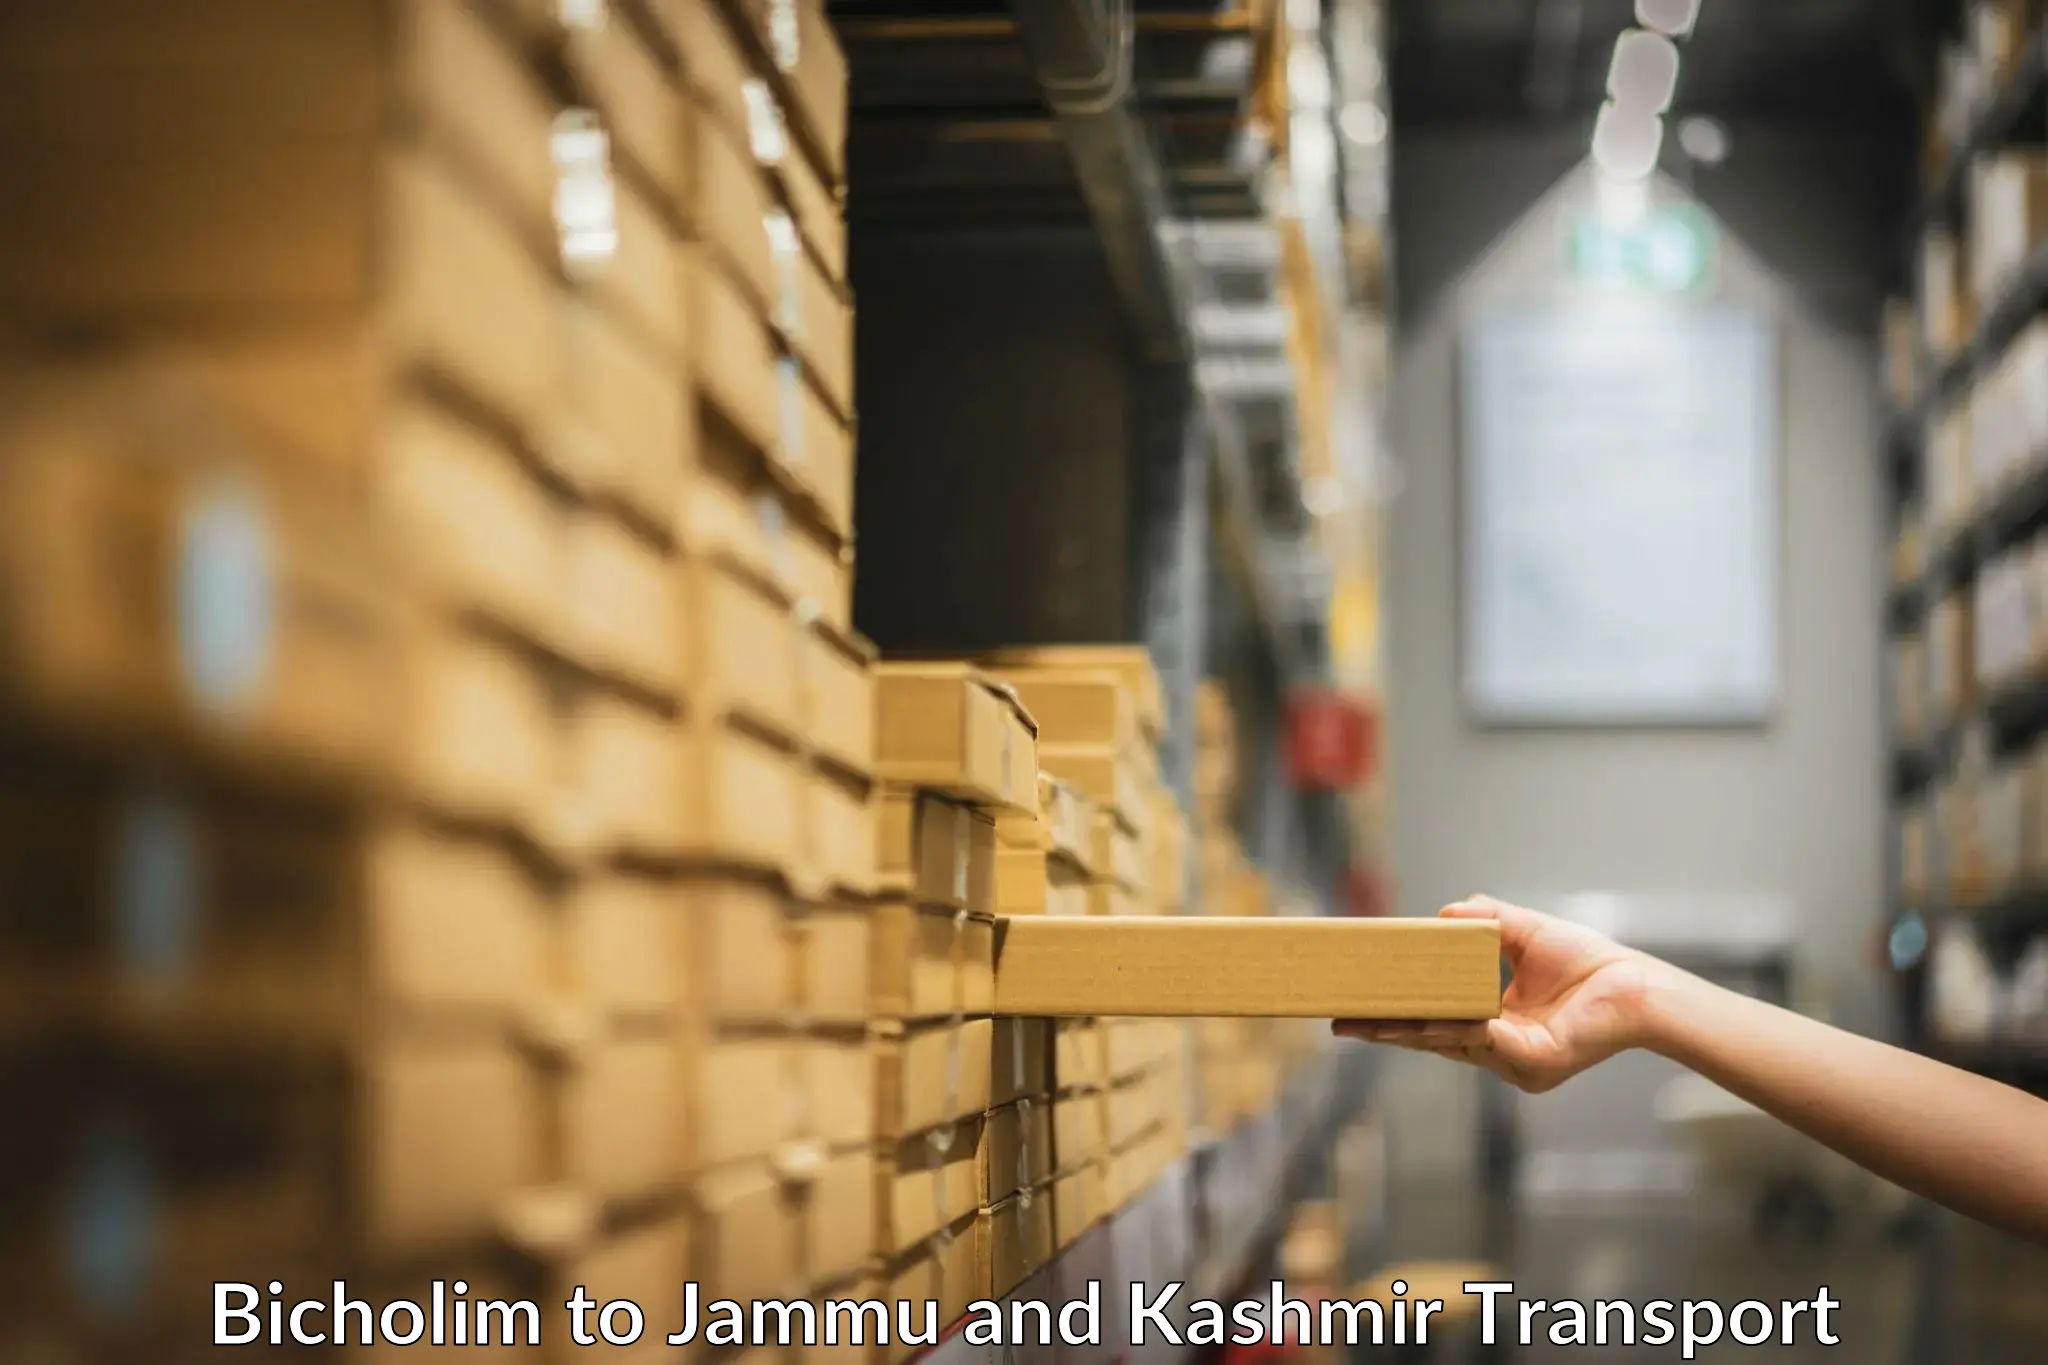 Shipping partner Bicholim to Jammu and Kashmir